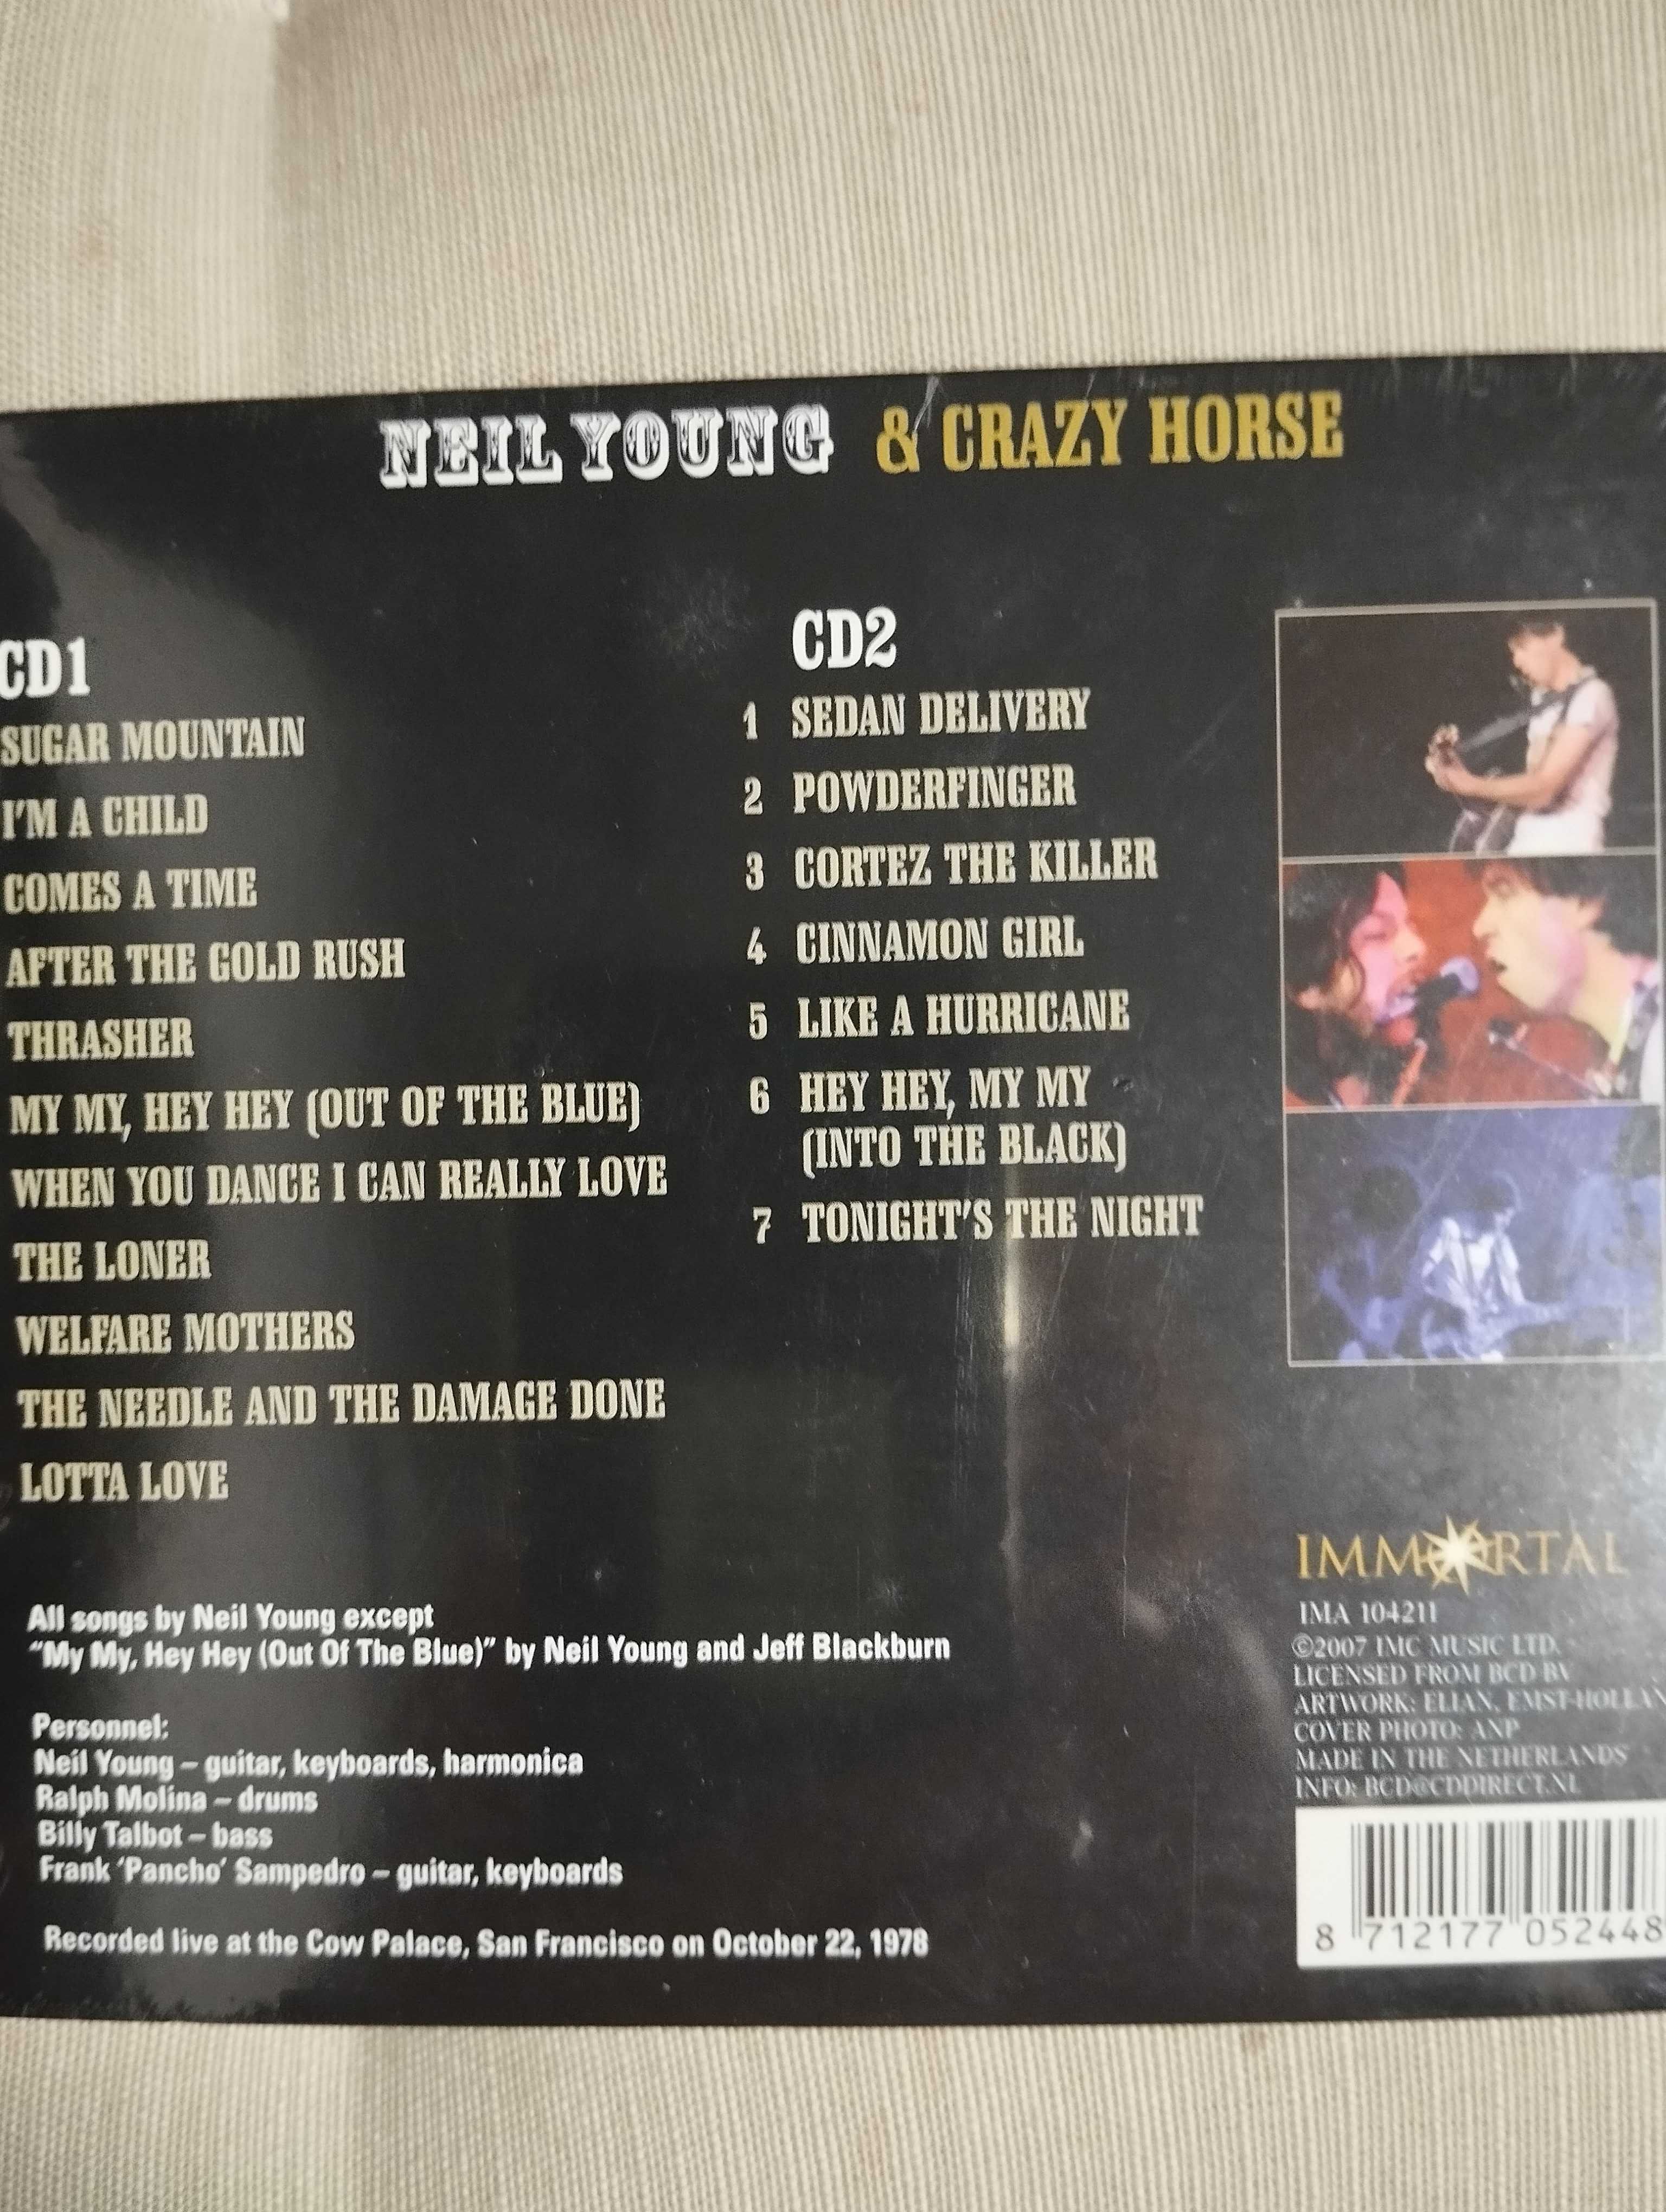 Neil Young & Crazy Horse Live in San Francisco album 2 CD folia